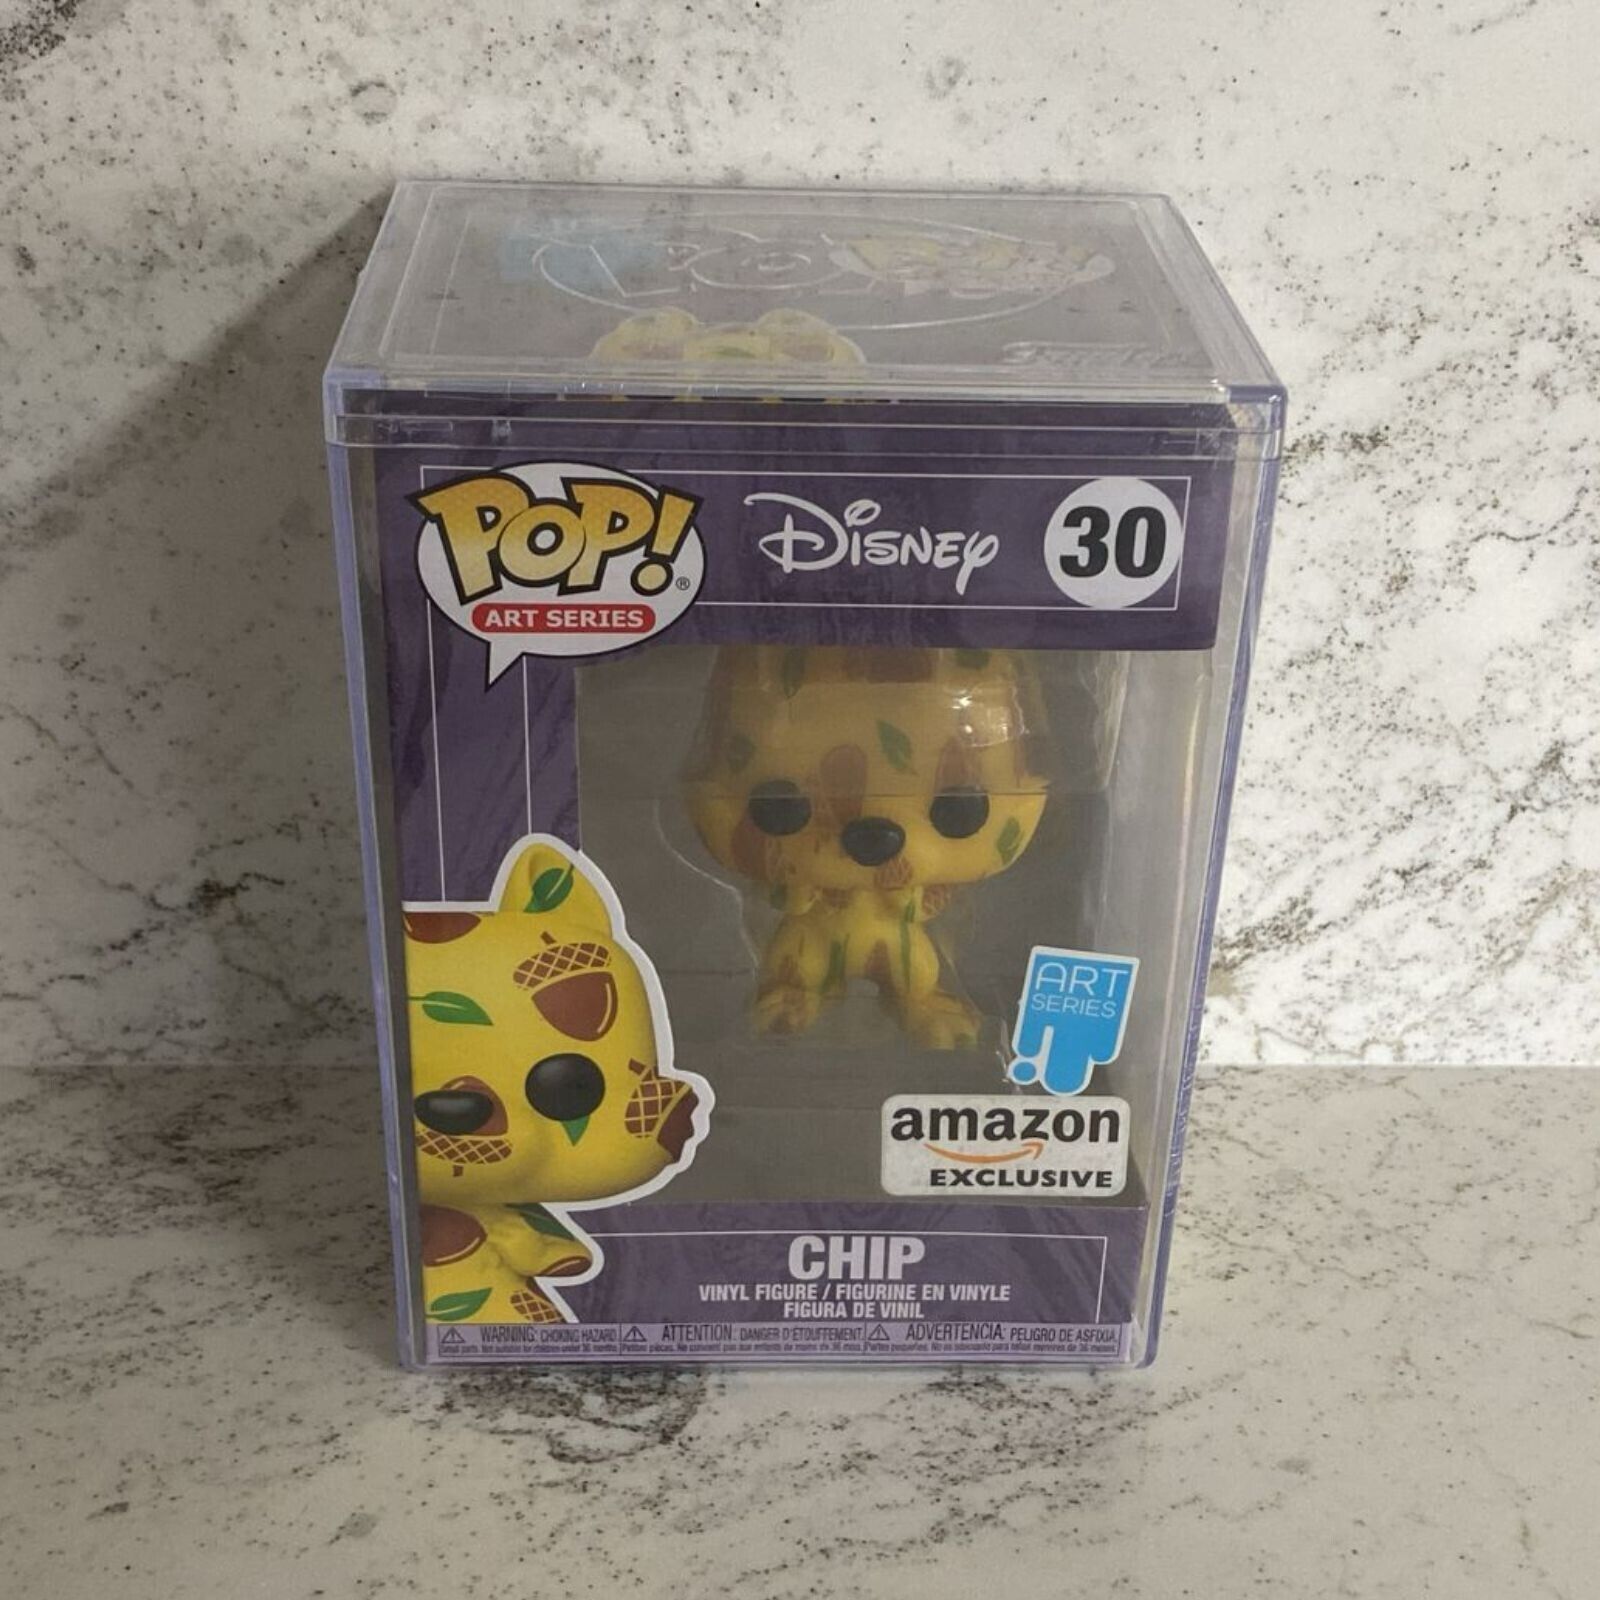 Funko POP Art Series: Disney - Chip Amazon Exclusive - With Protector Case